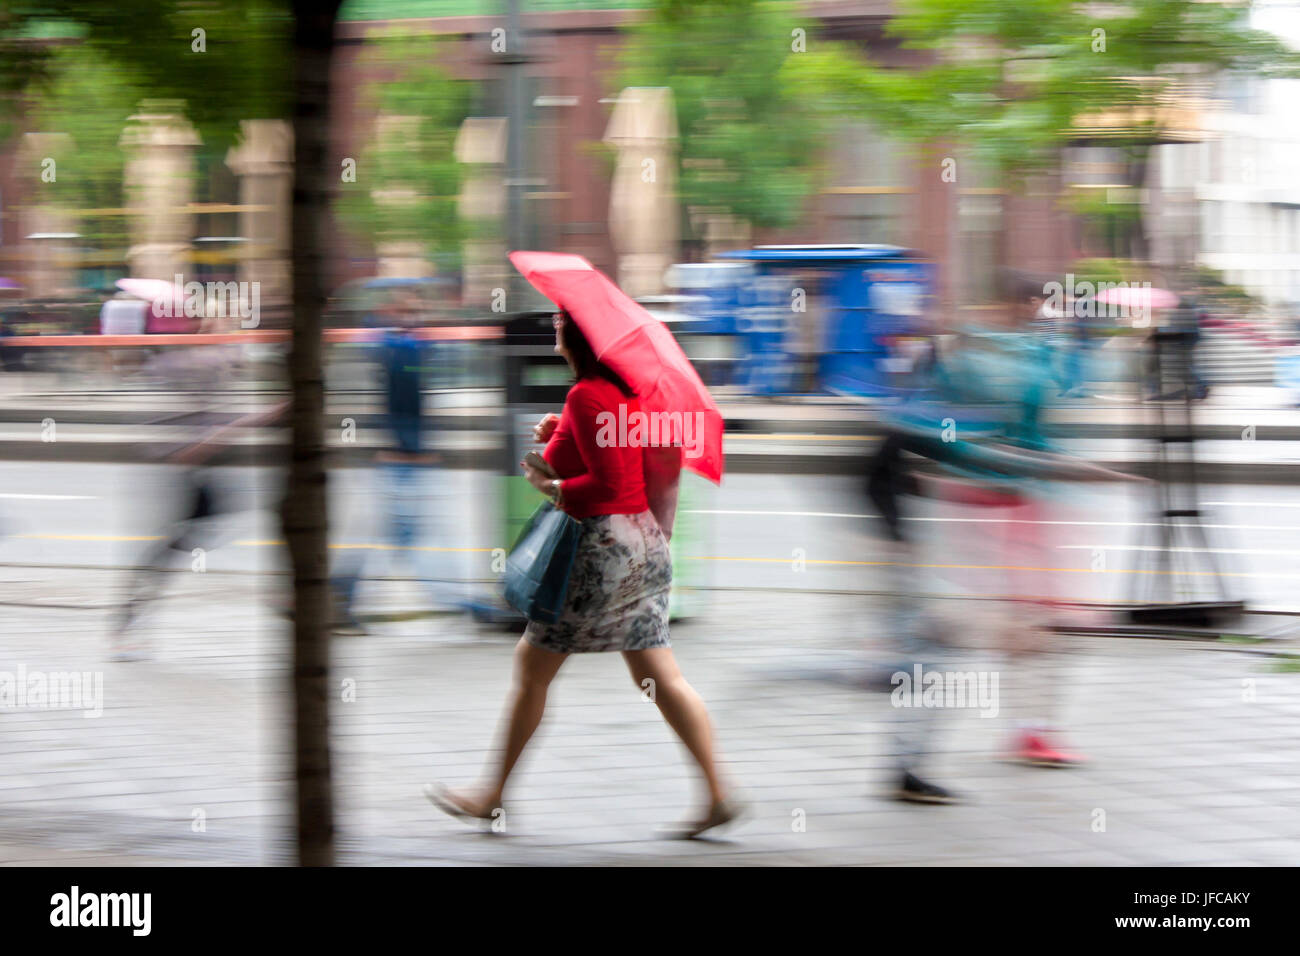 Belgrade, Serbia - May 5, 2017: Blurry woman under umbrella walking on the city street on a rainy spring day Stock Photo